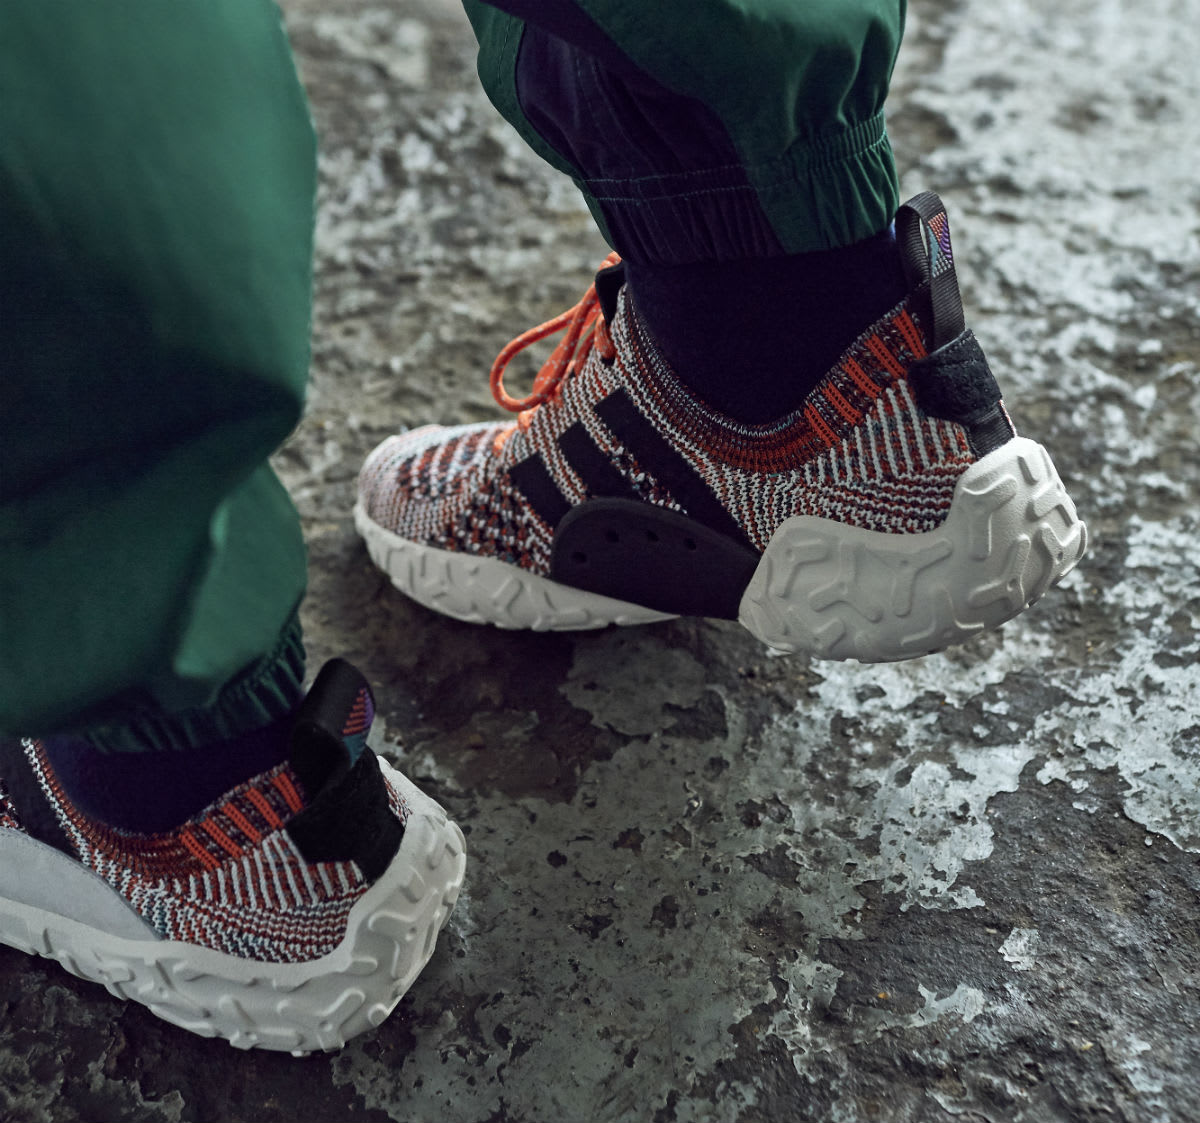 æggelederne bevæge sig ulækkert Adidas Created Bespoke Merino Wool Primeknit For Its Newest Sneaker |  Complex